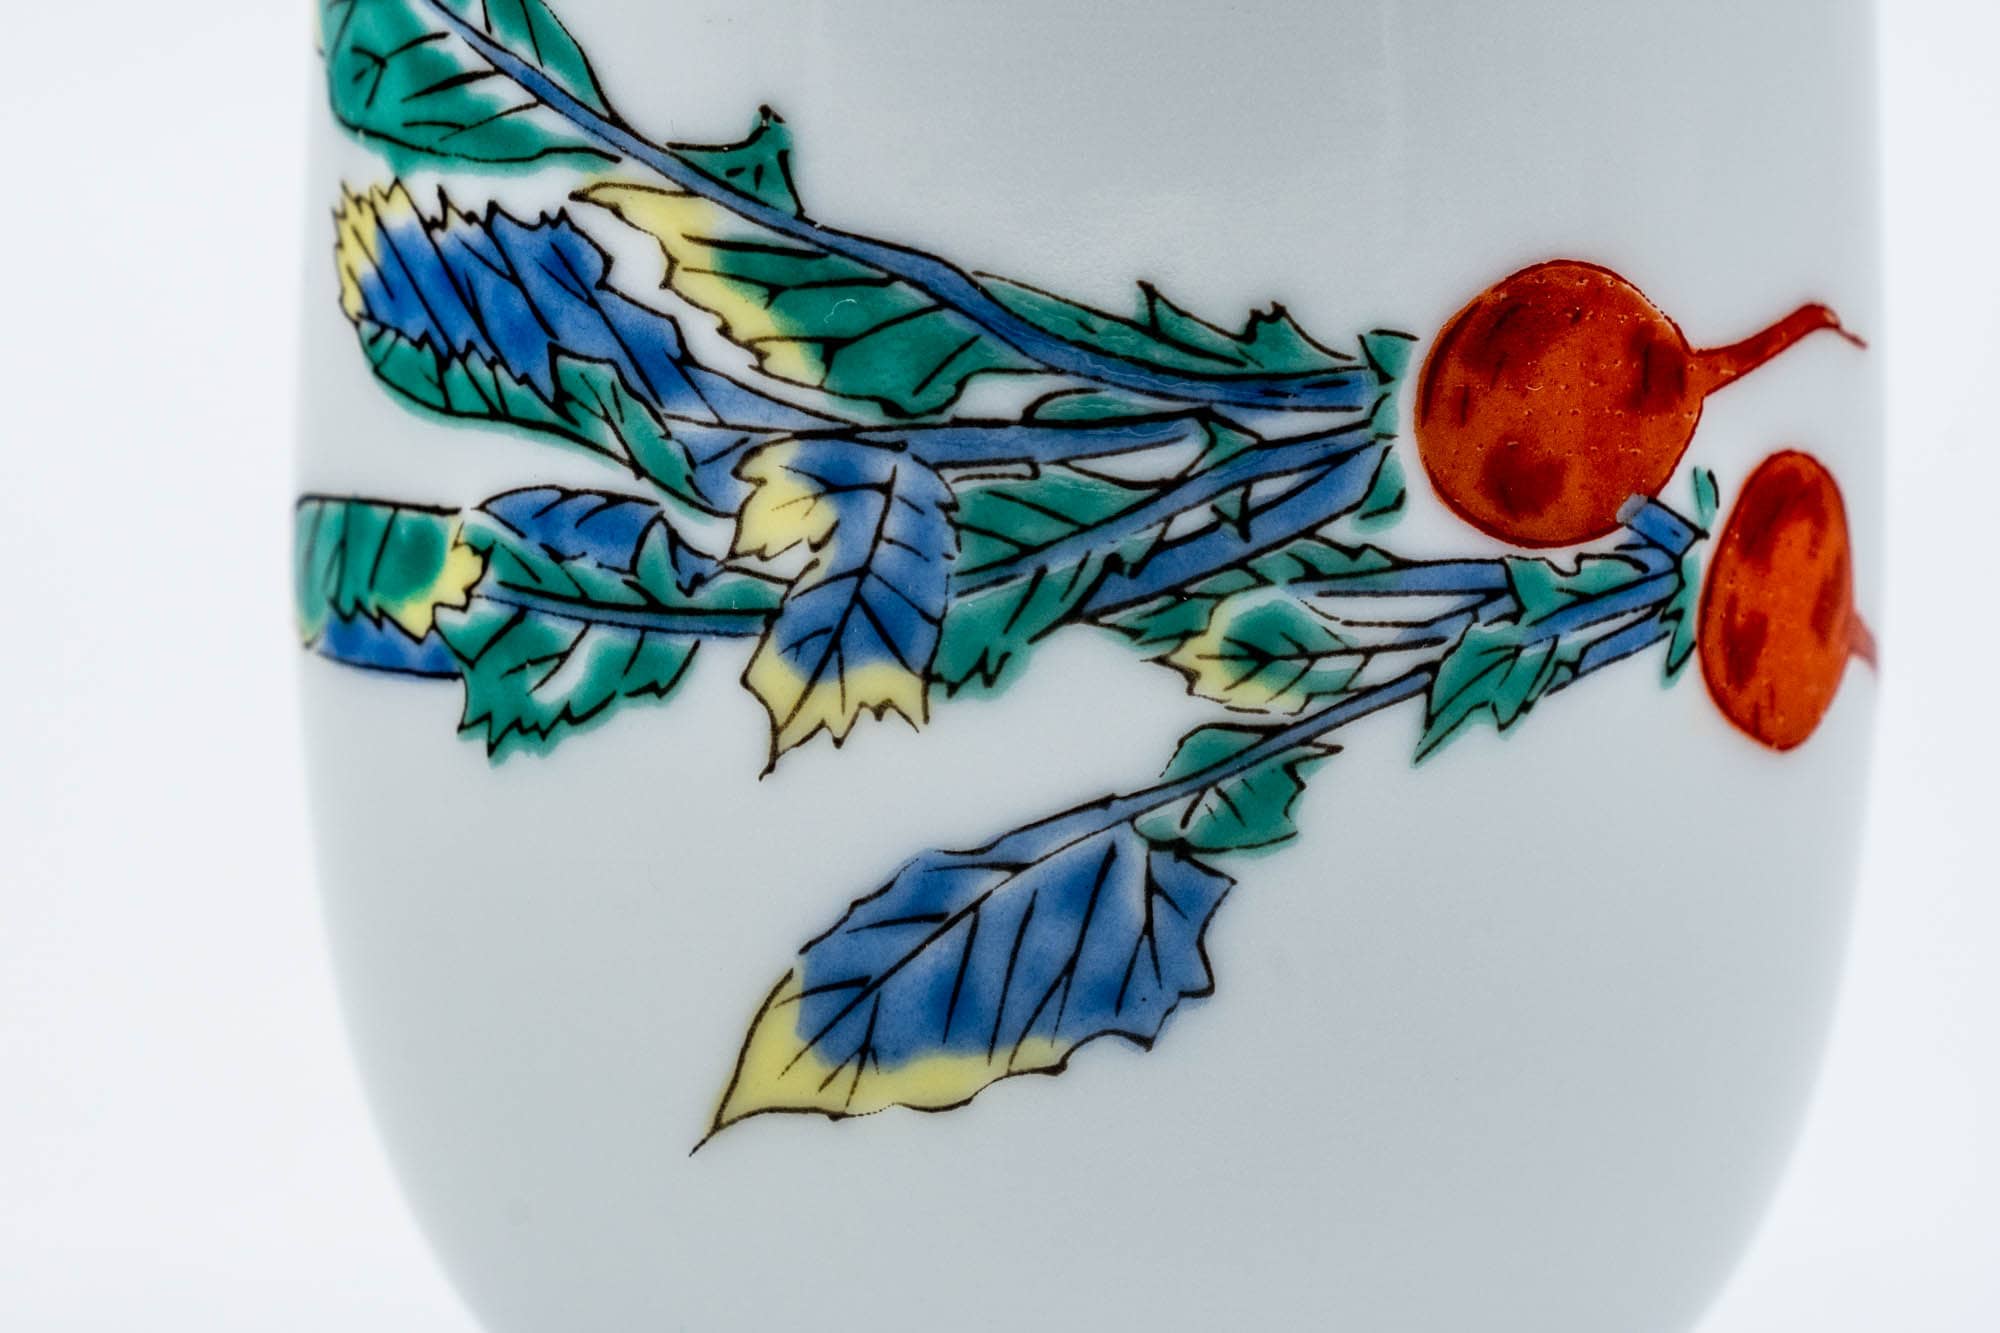 Japanese Teacup - White Porcelain Painted Turnips Arita-yaki Yunomi - 120ml